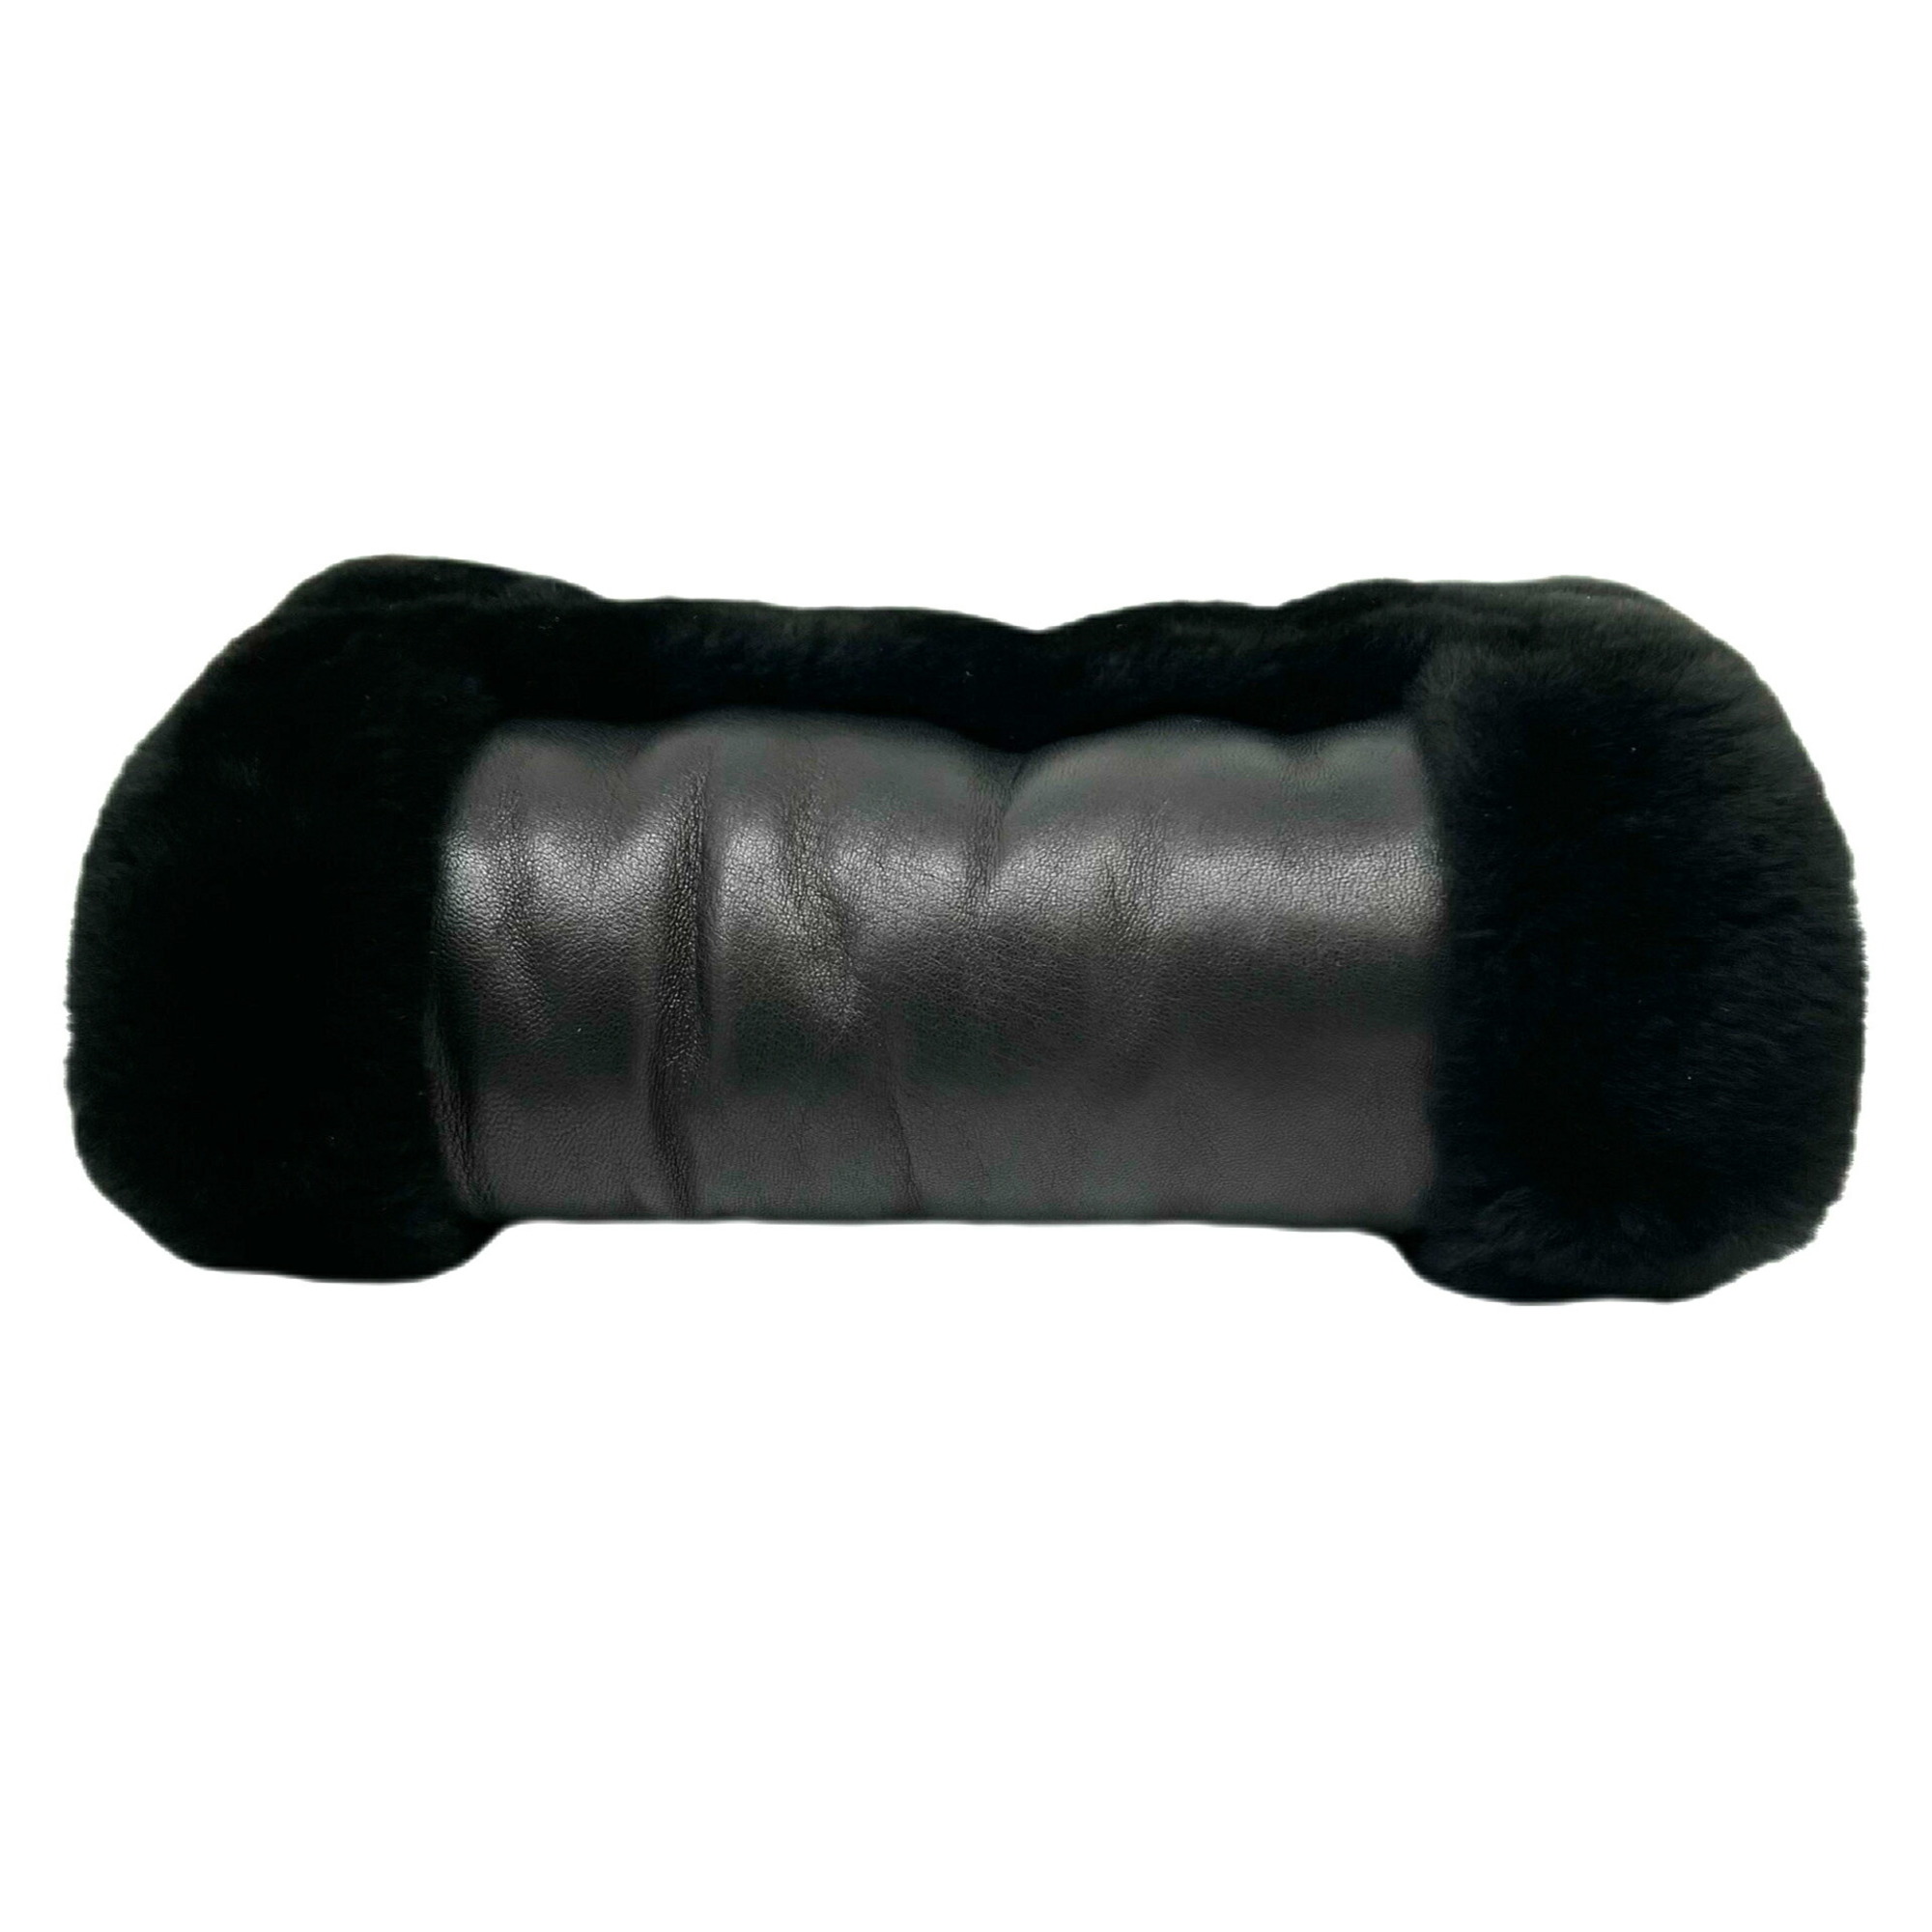 HERMES hand muff black warmer gloves sheepskin nutria lambskin fur